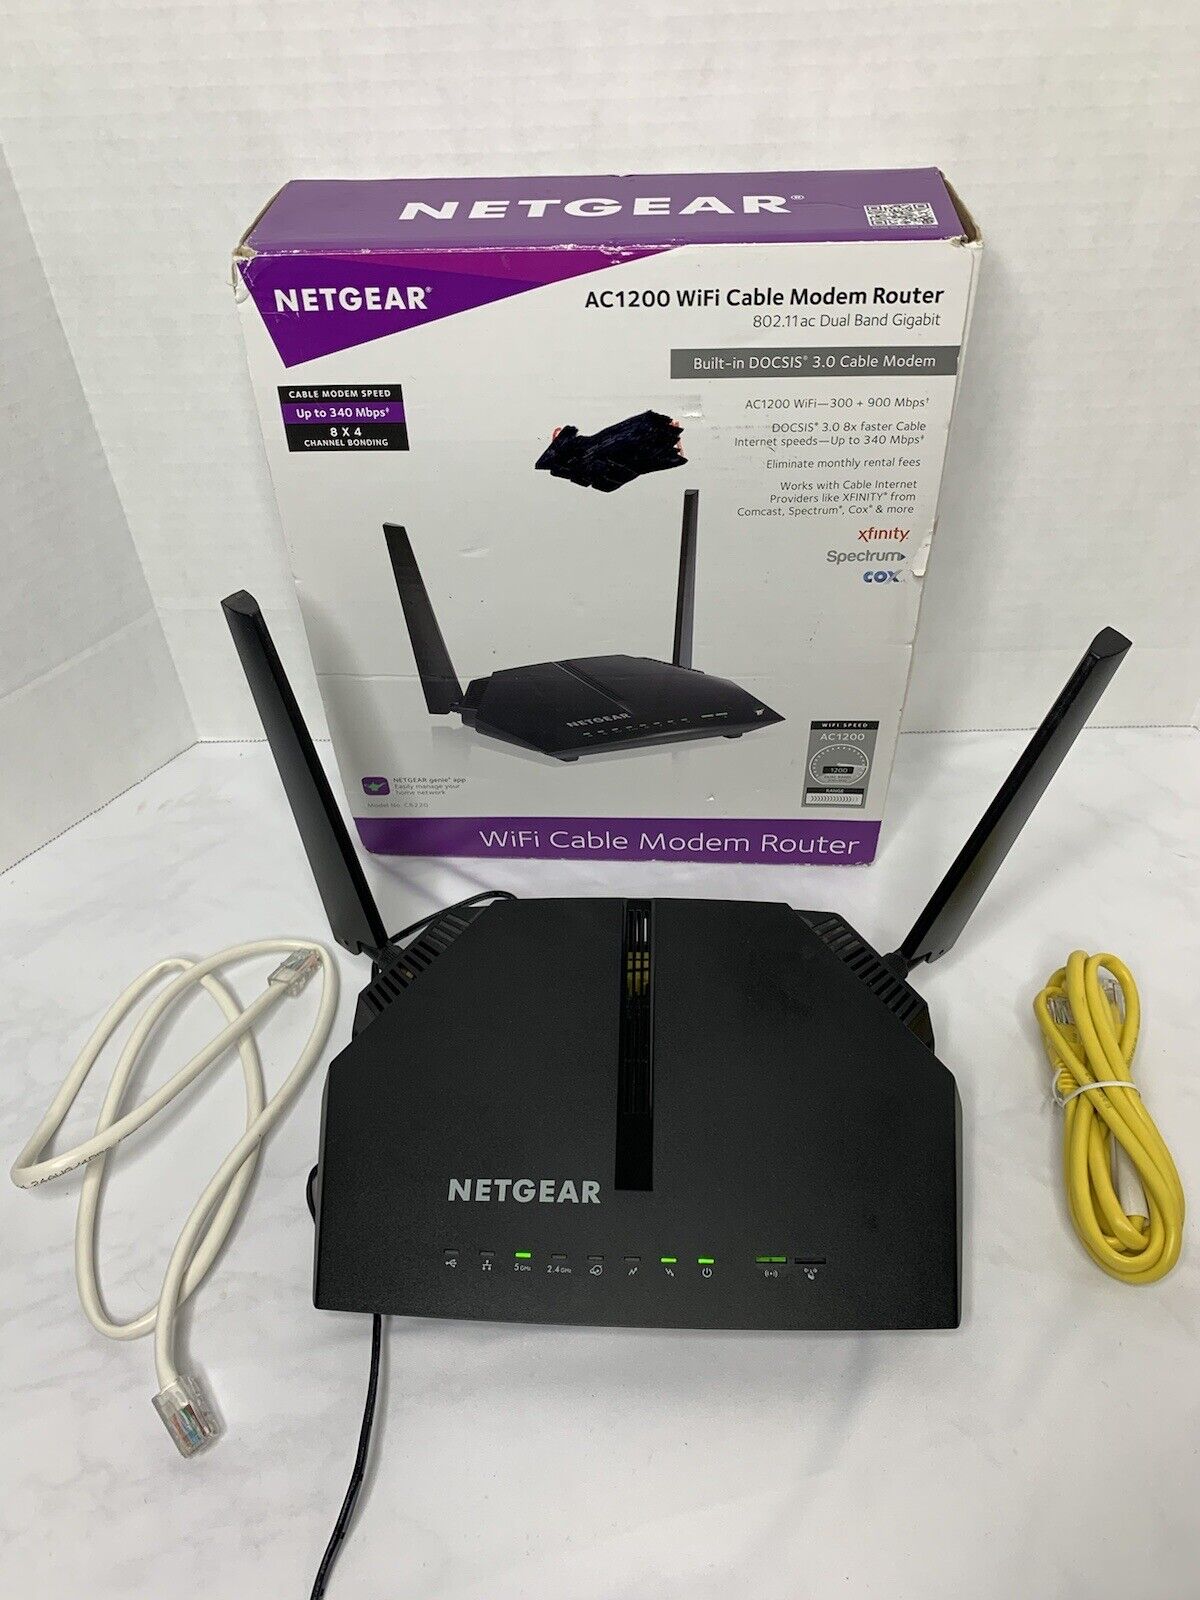 NETGEAR AC1200 WiFi Cable Modem Router Model C6220 802.11ac Gigabit Dual Band